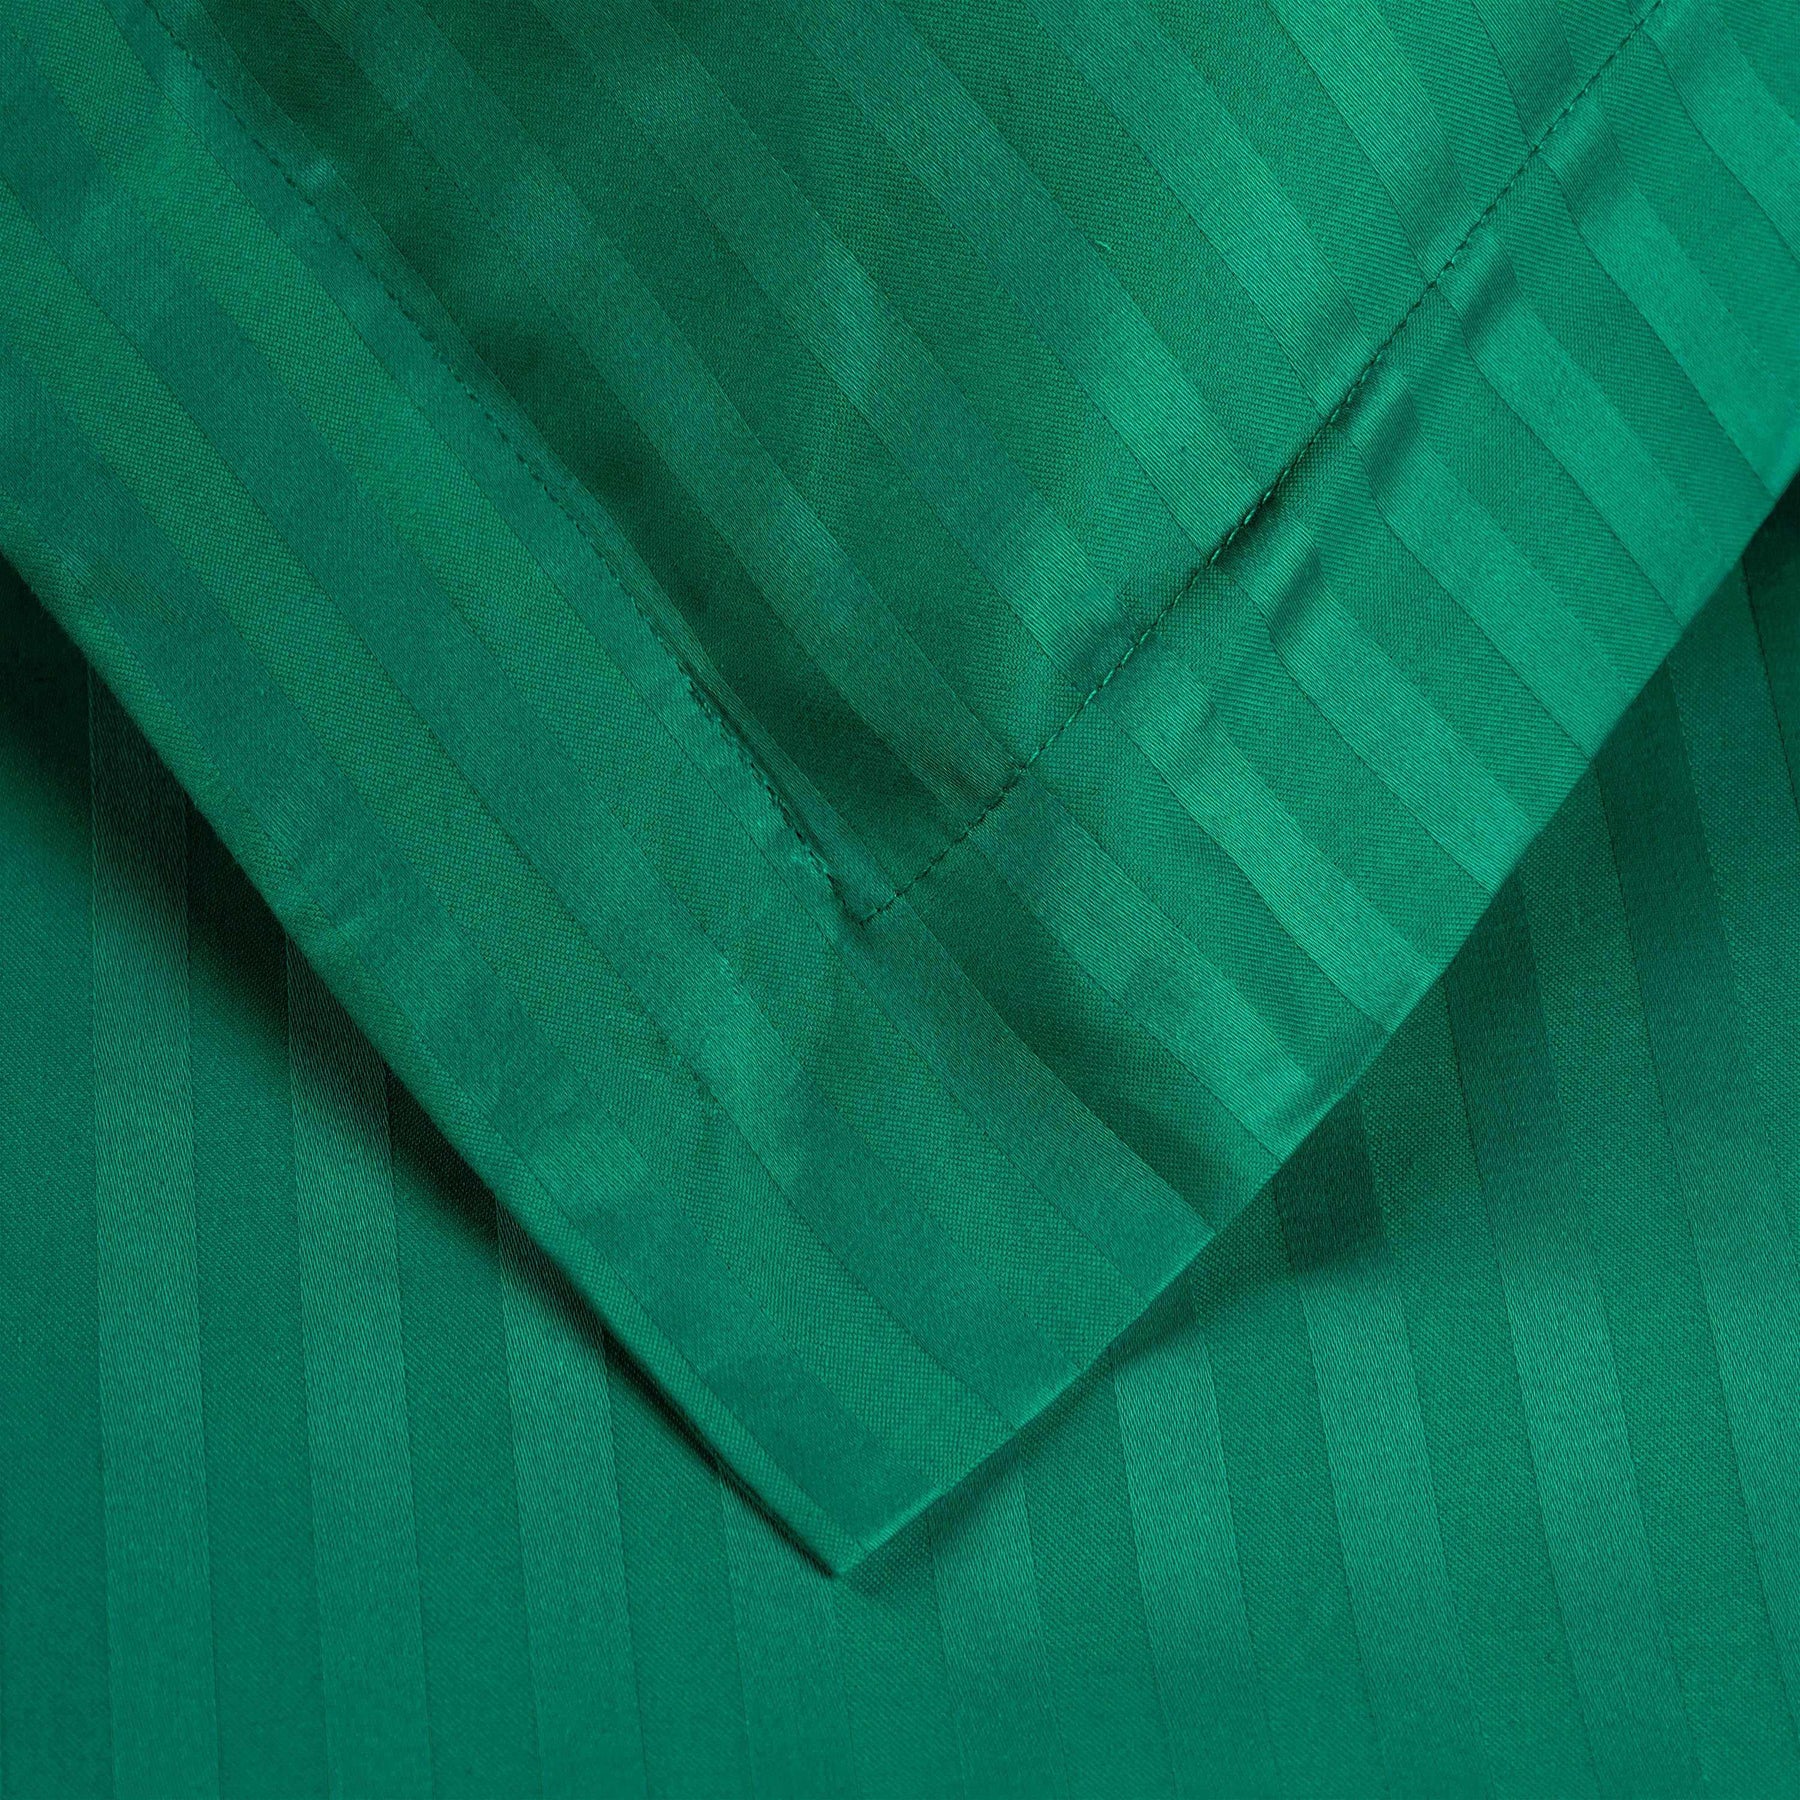 Superior 400 Thread Count Lightweight Stripe Egyptian Cotton Duvet Cover Set - Hunter Green 